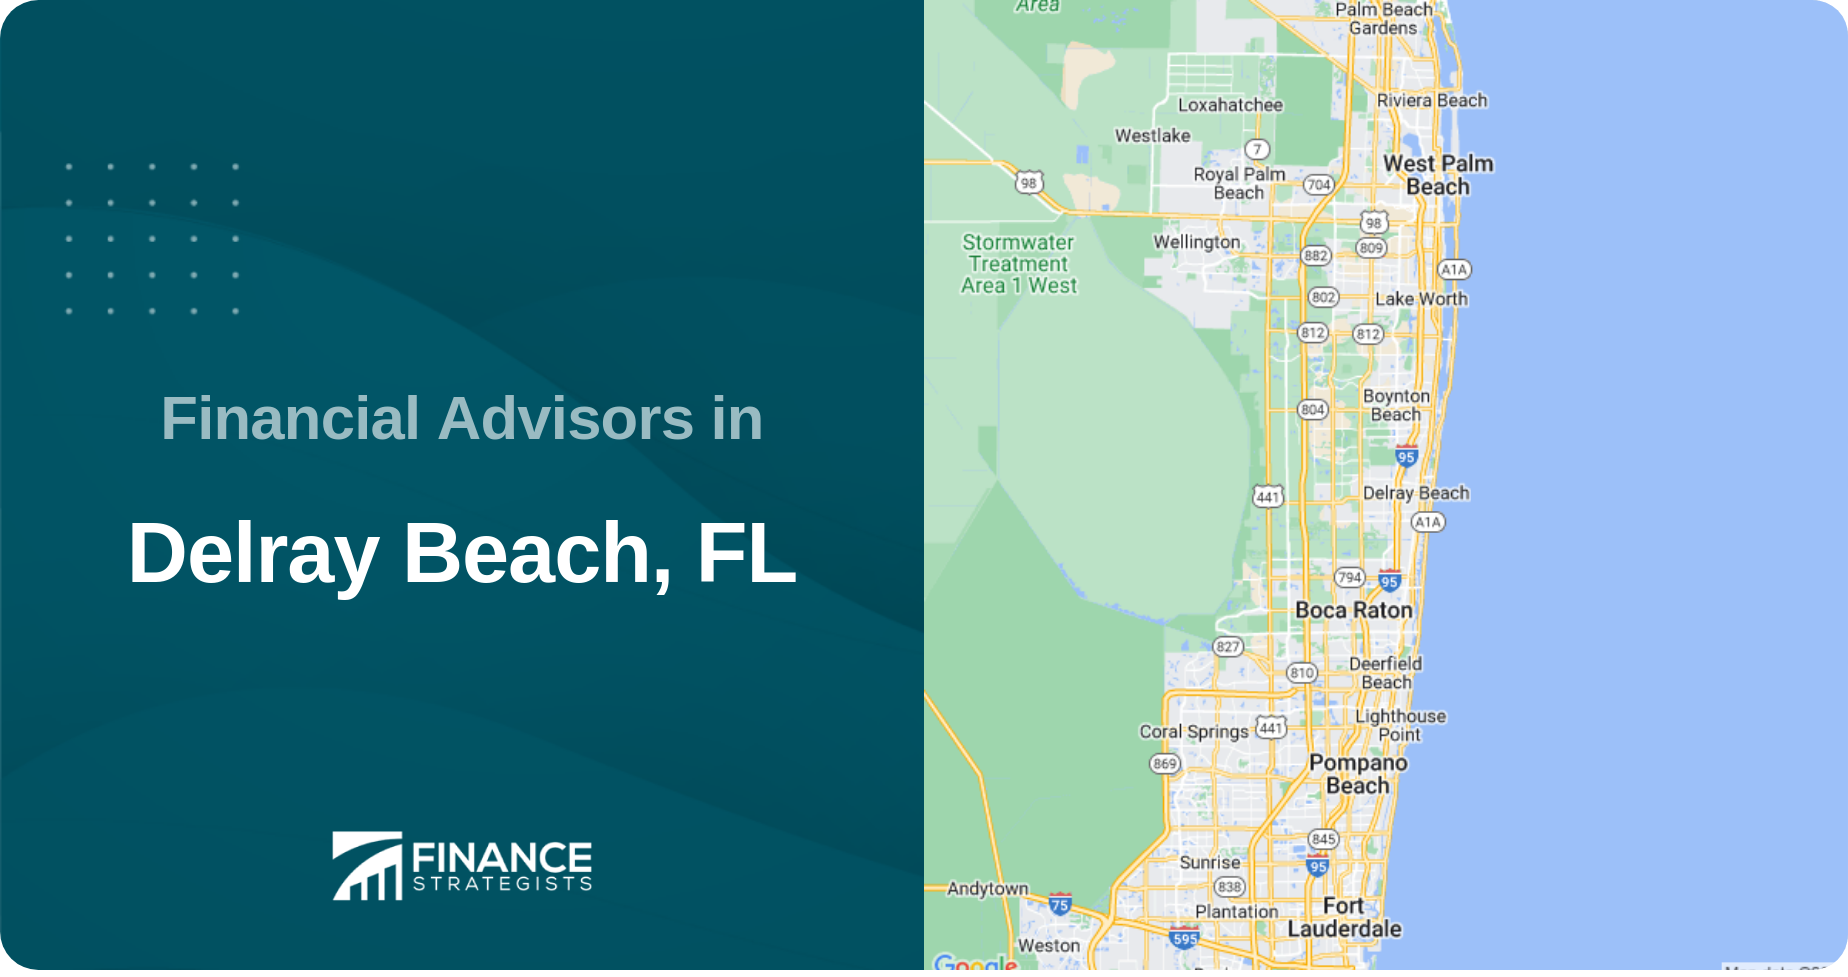 Financial Advisors in Delray Beach, FL